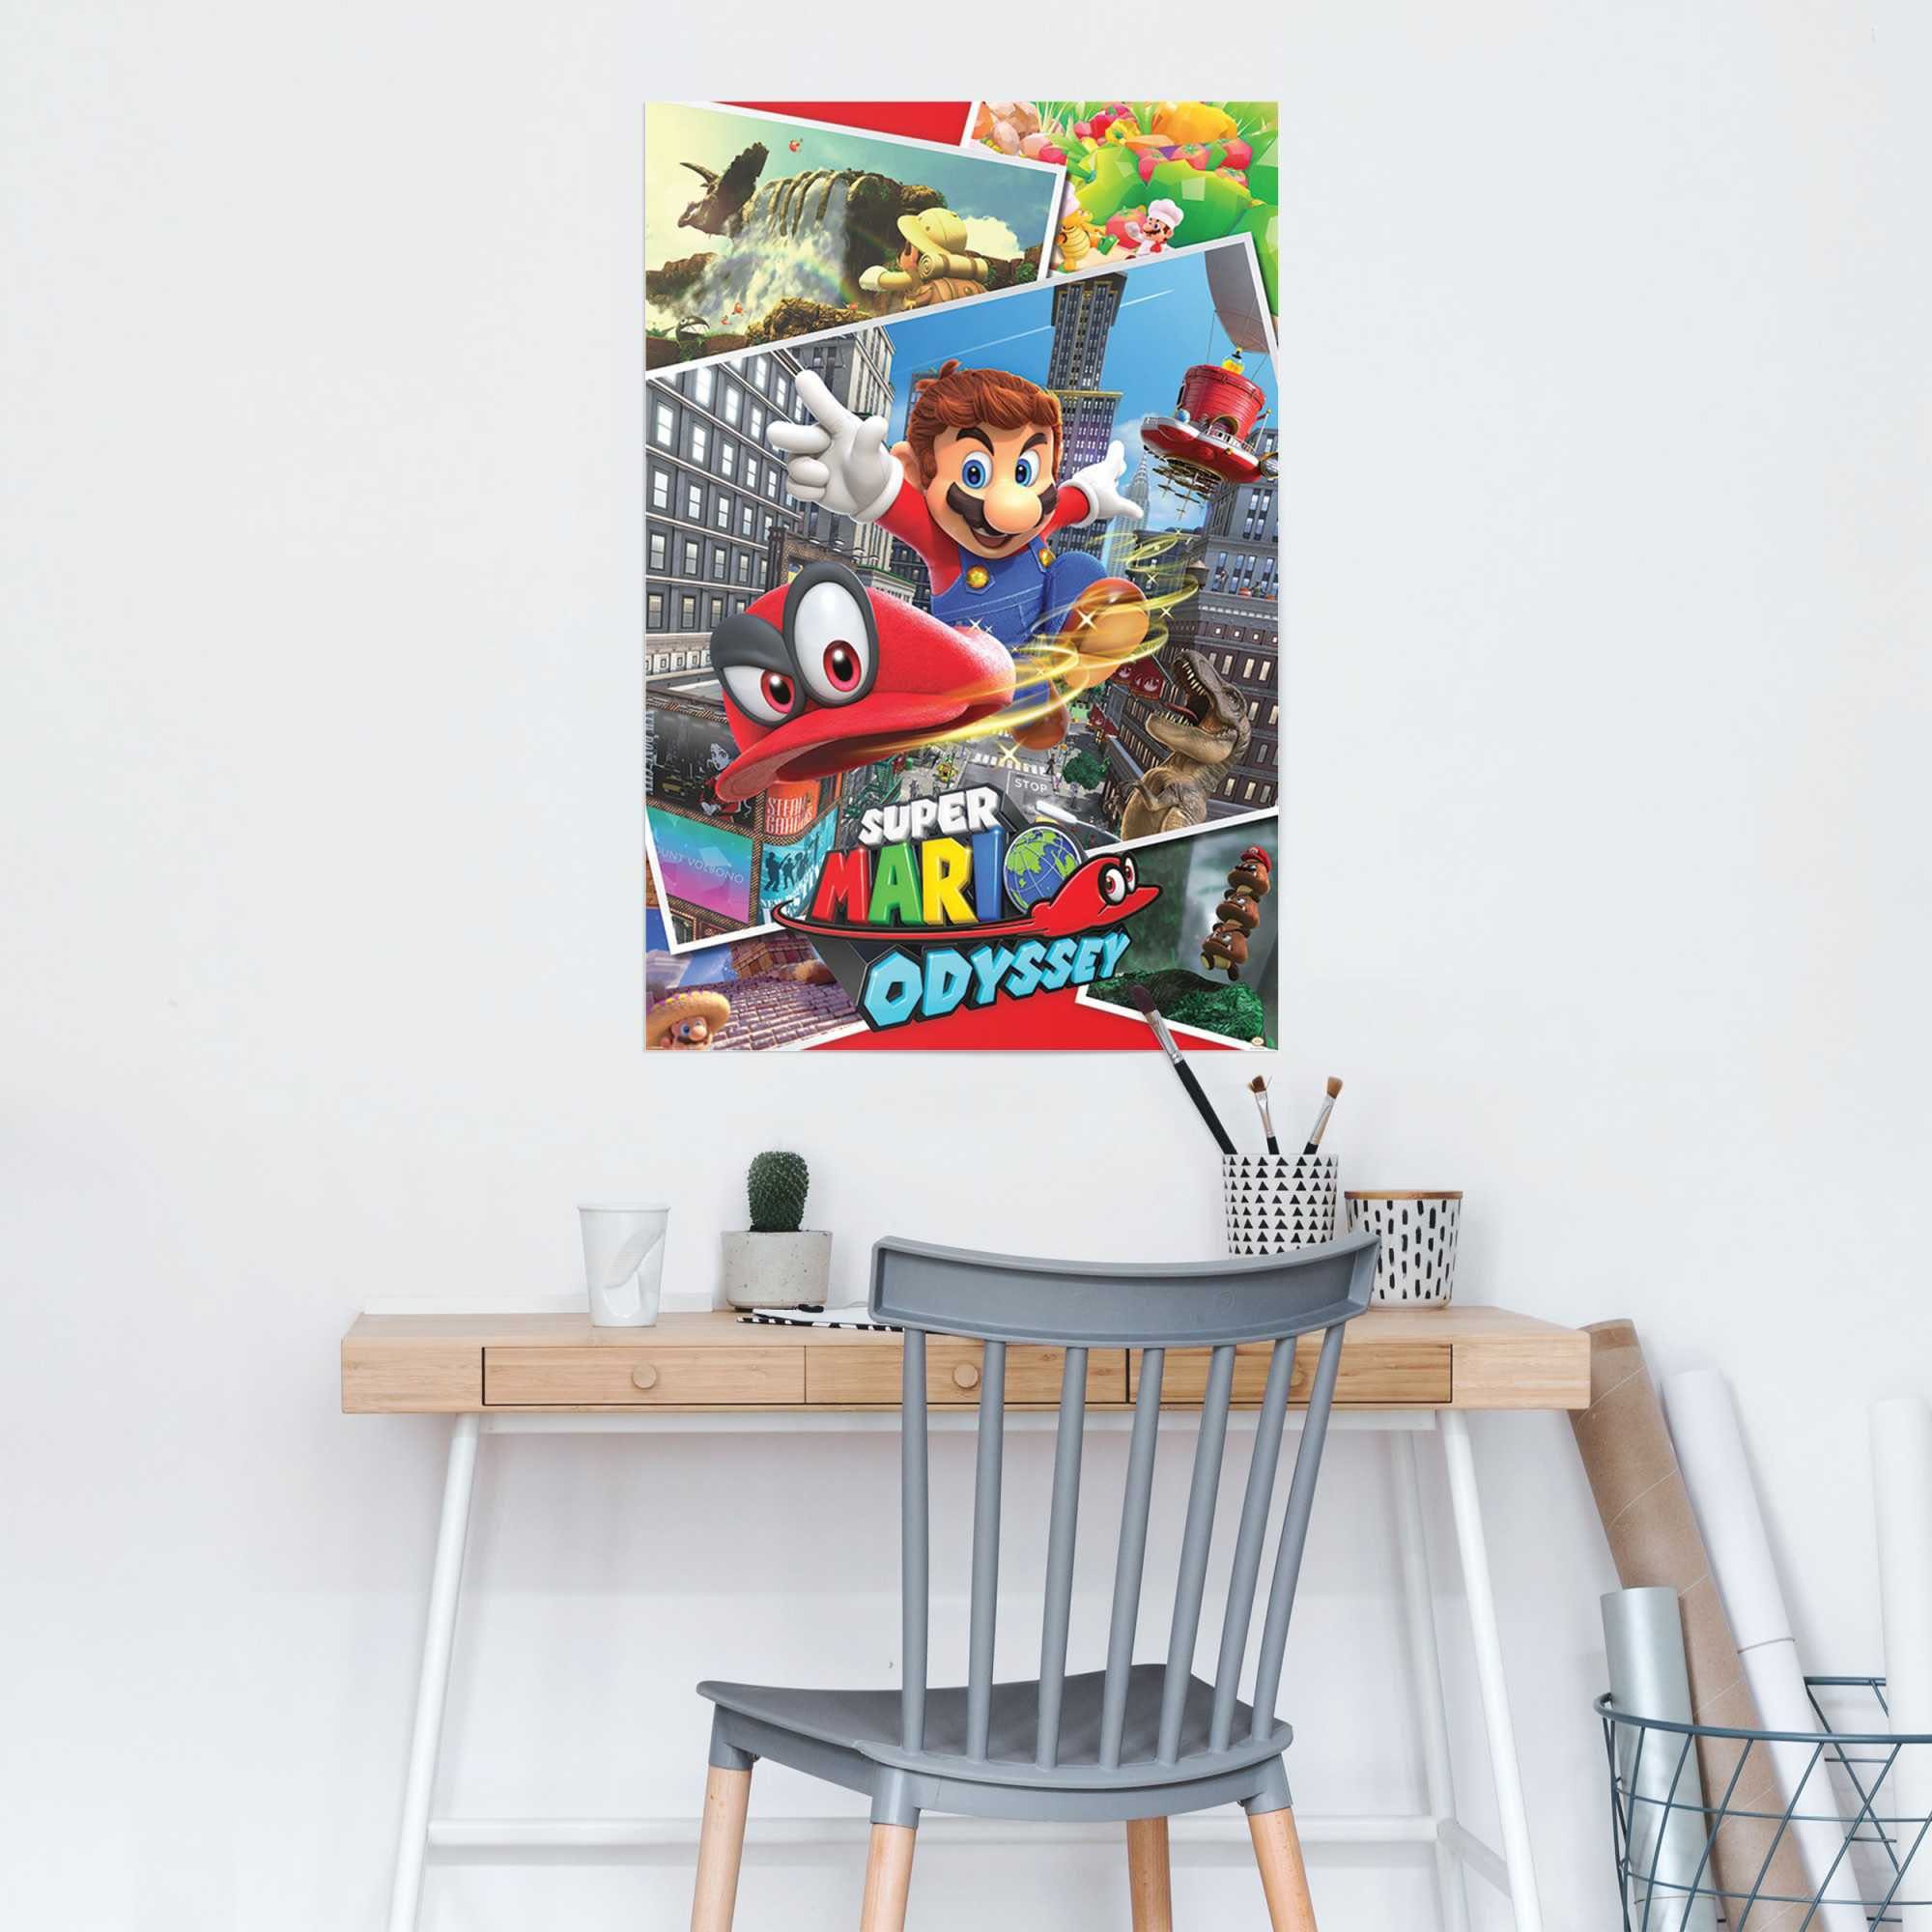 St) Poster Mario Super (1 Odyssey, Reinders!